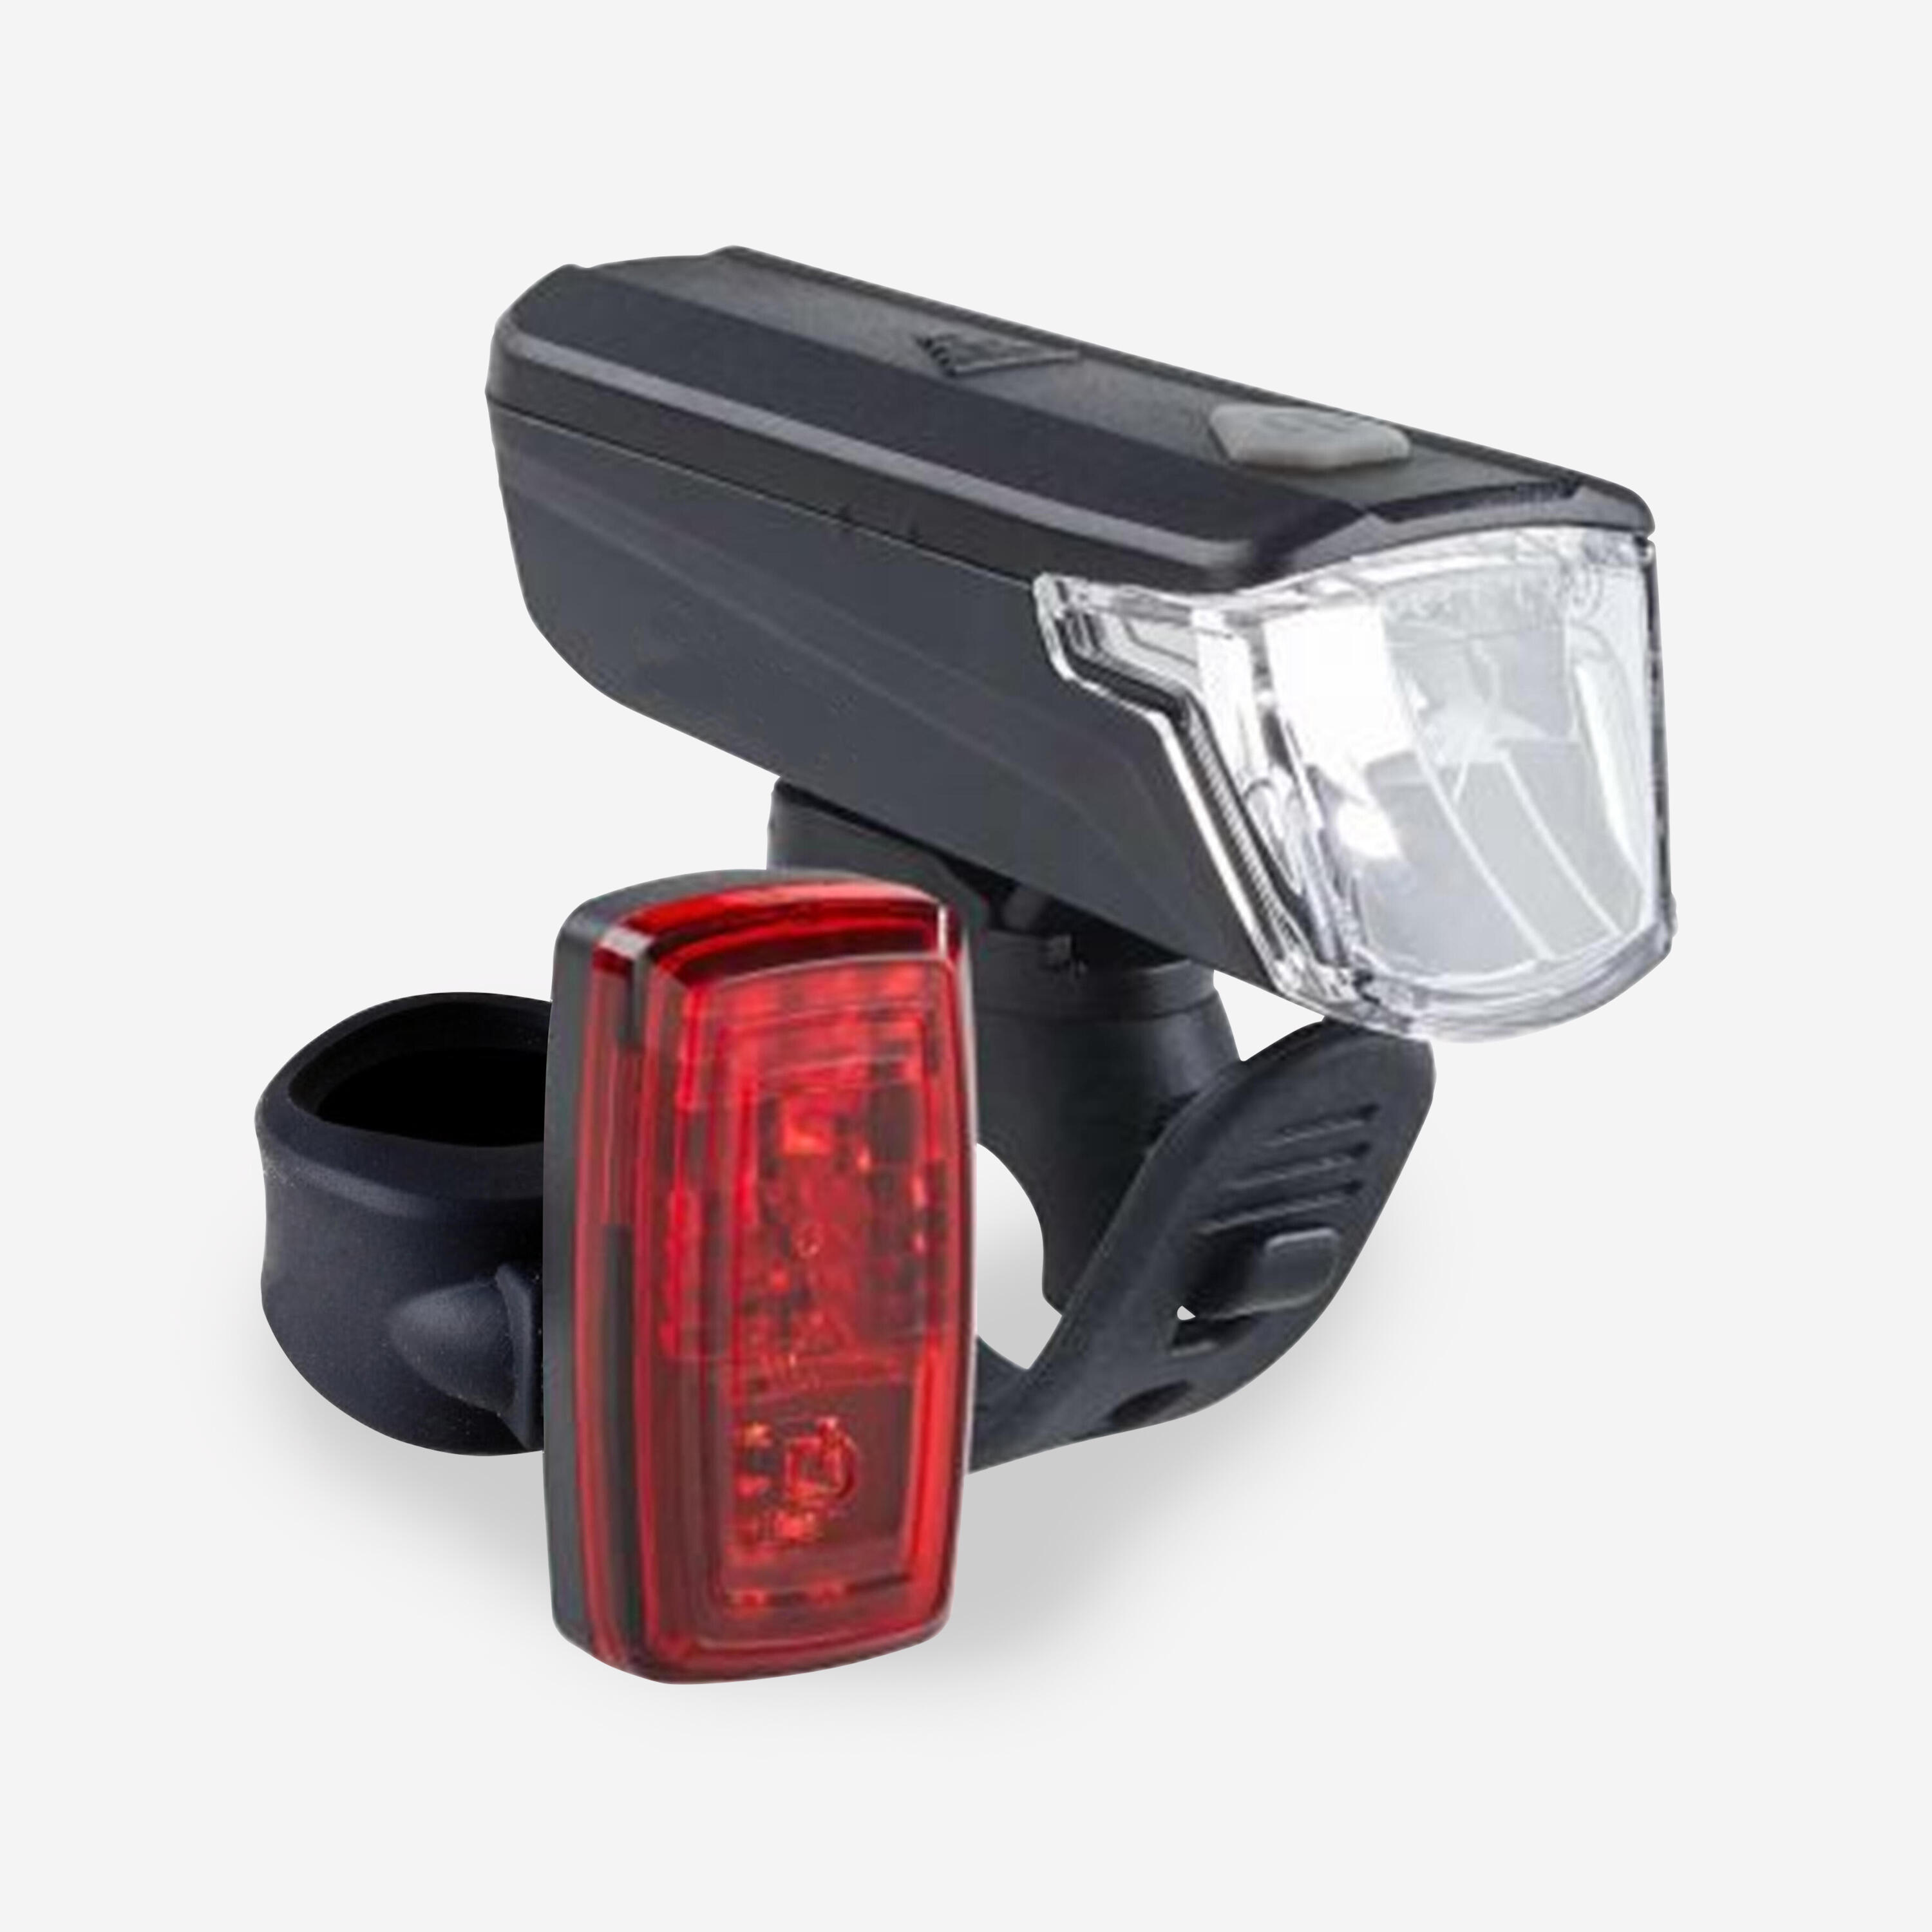 ELOPS Waterproof front and rear battery-powered LED bike light set